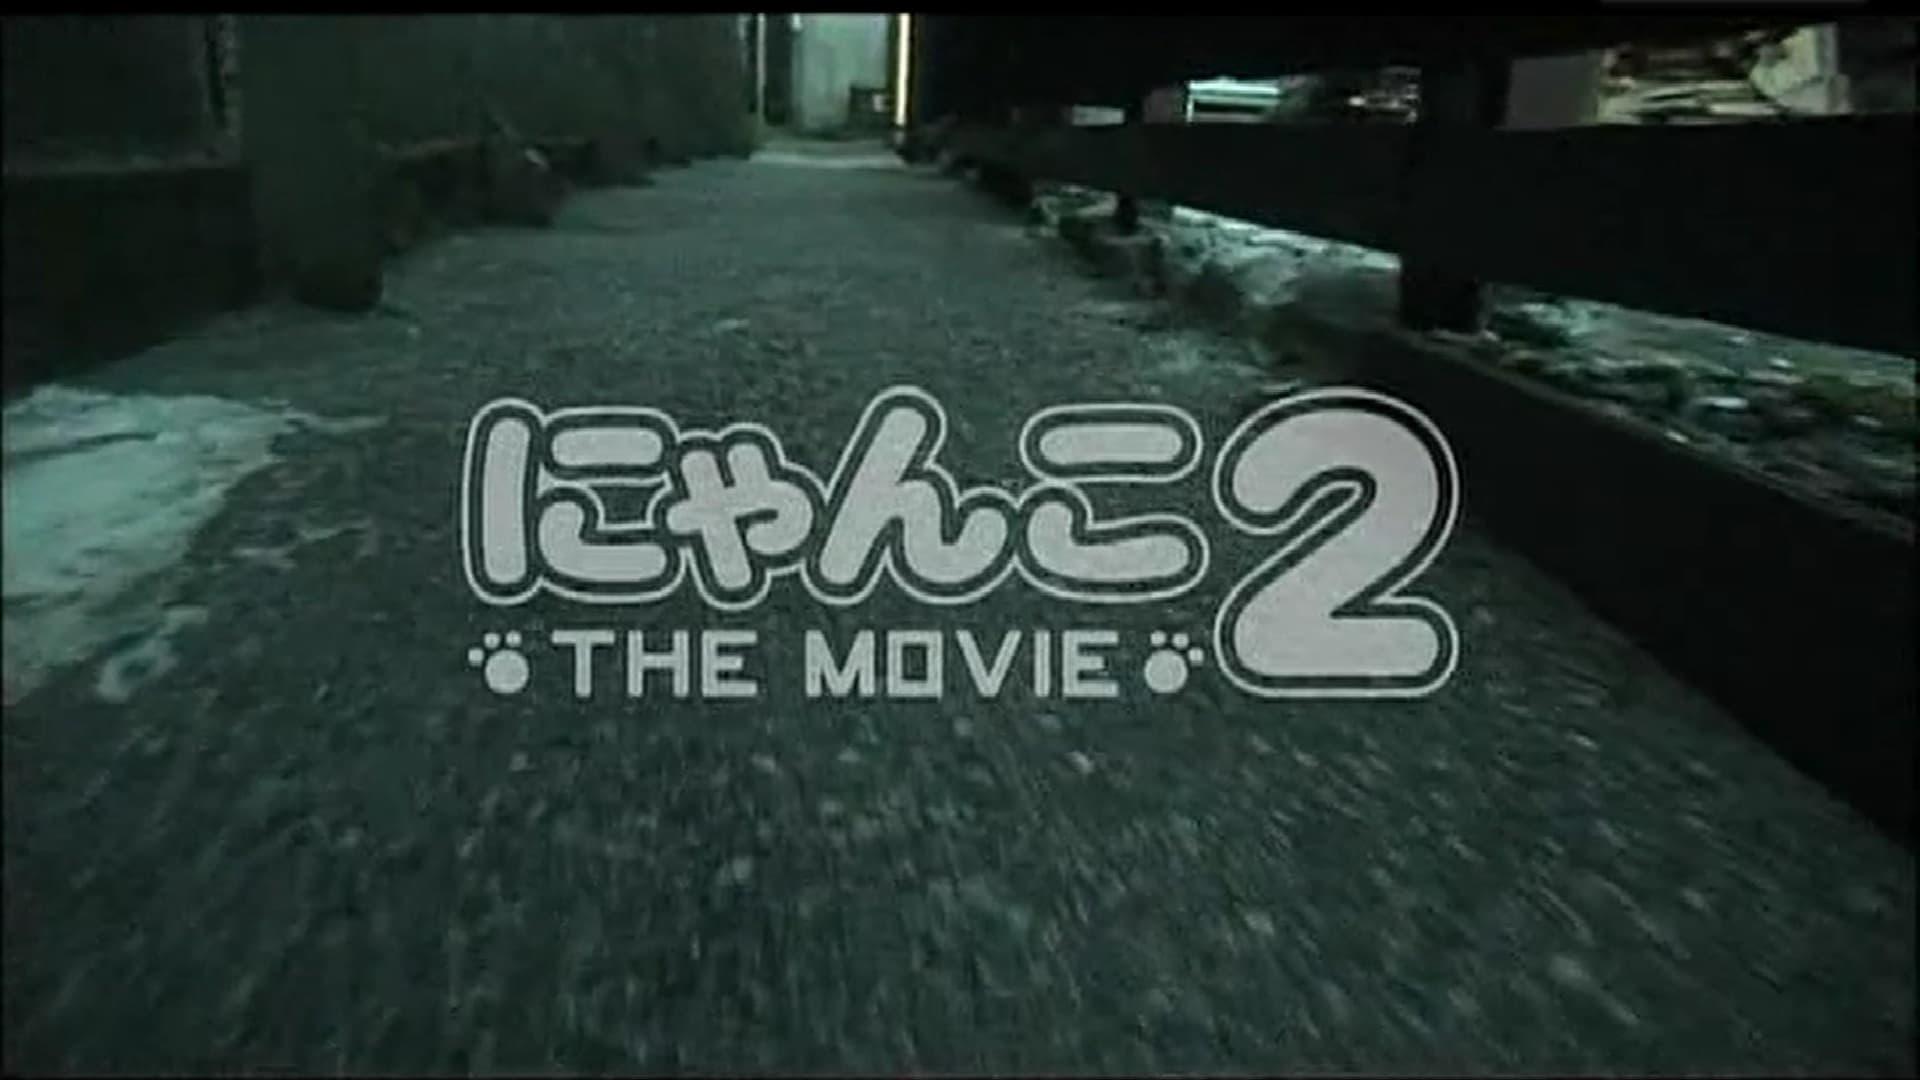 Nyanko the Movie 2 backdrop